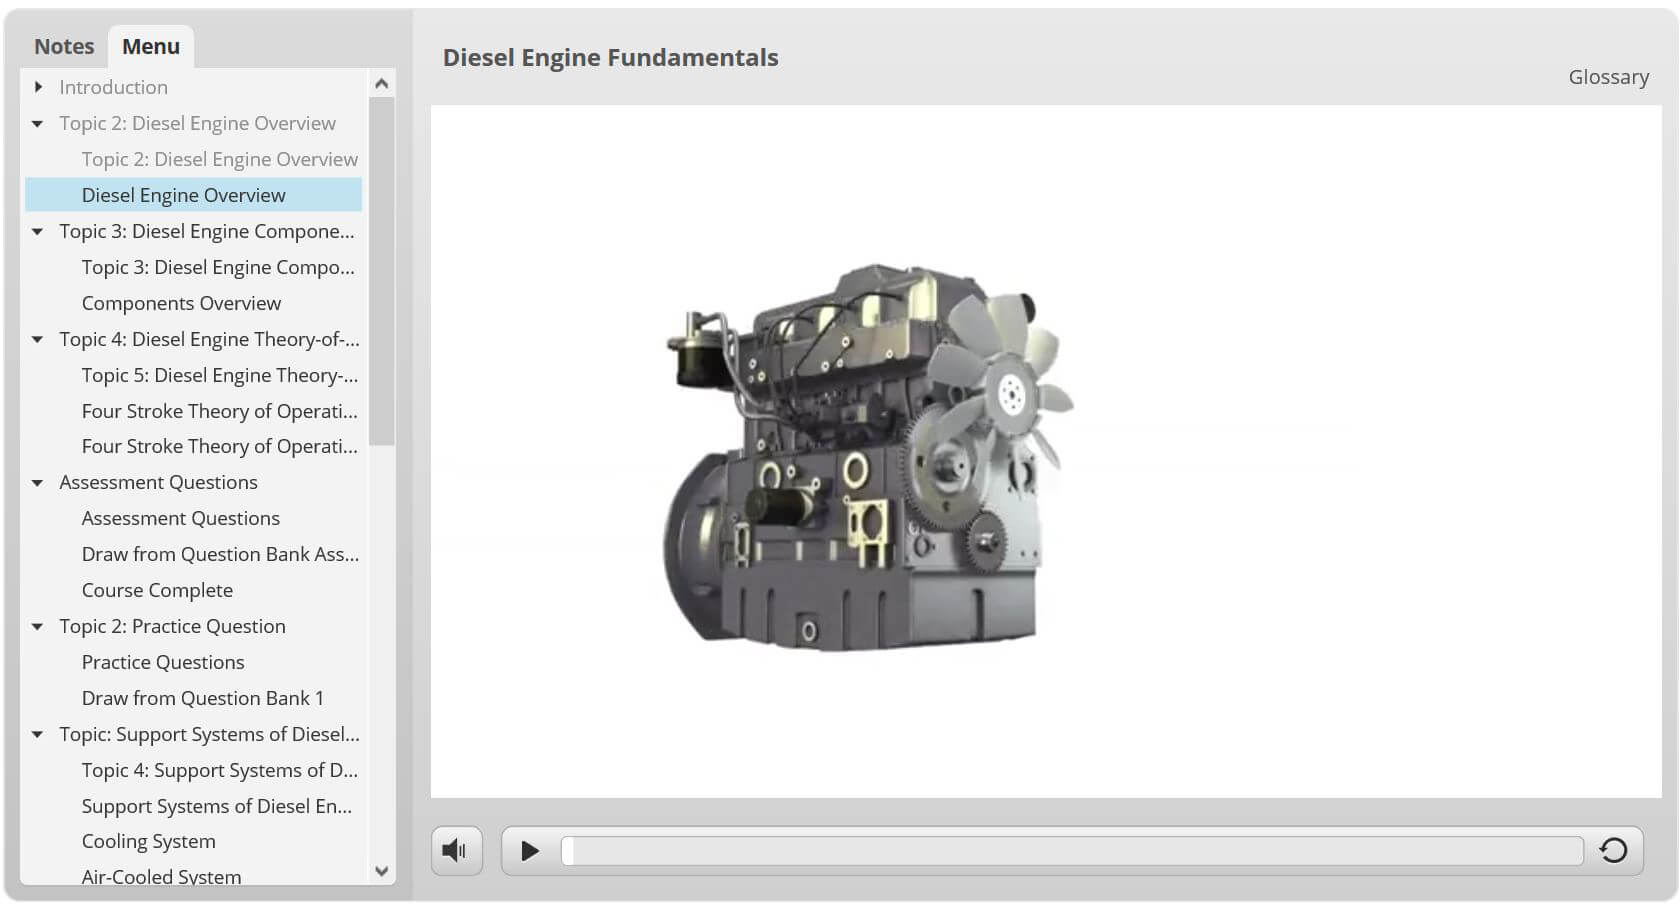 elearning - Diesel Engine Fundamentals - diesel engine overview